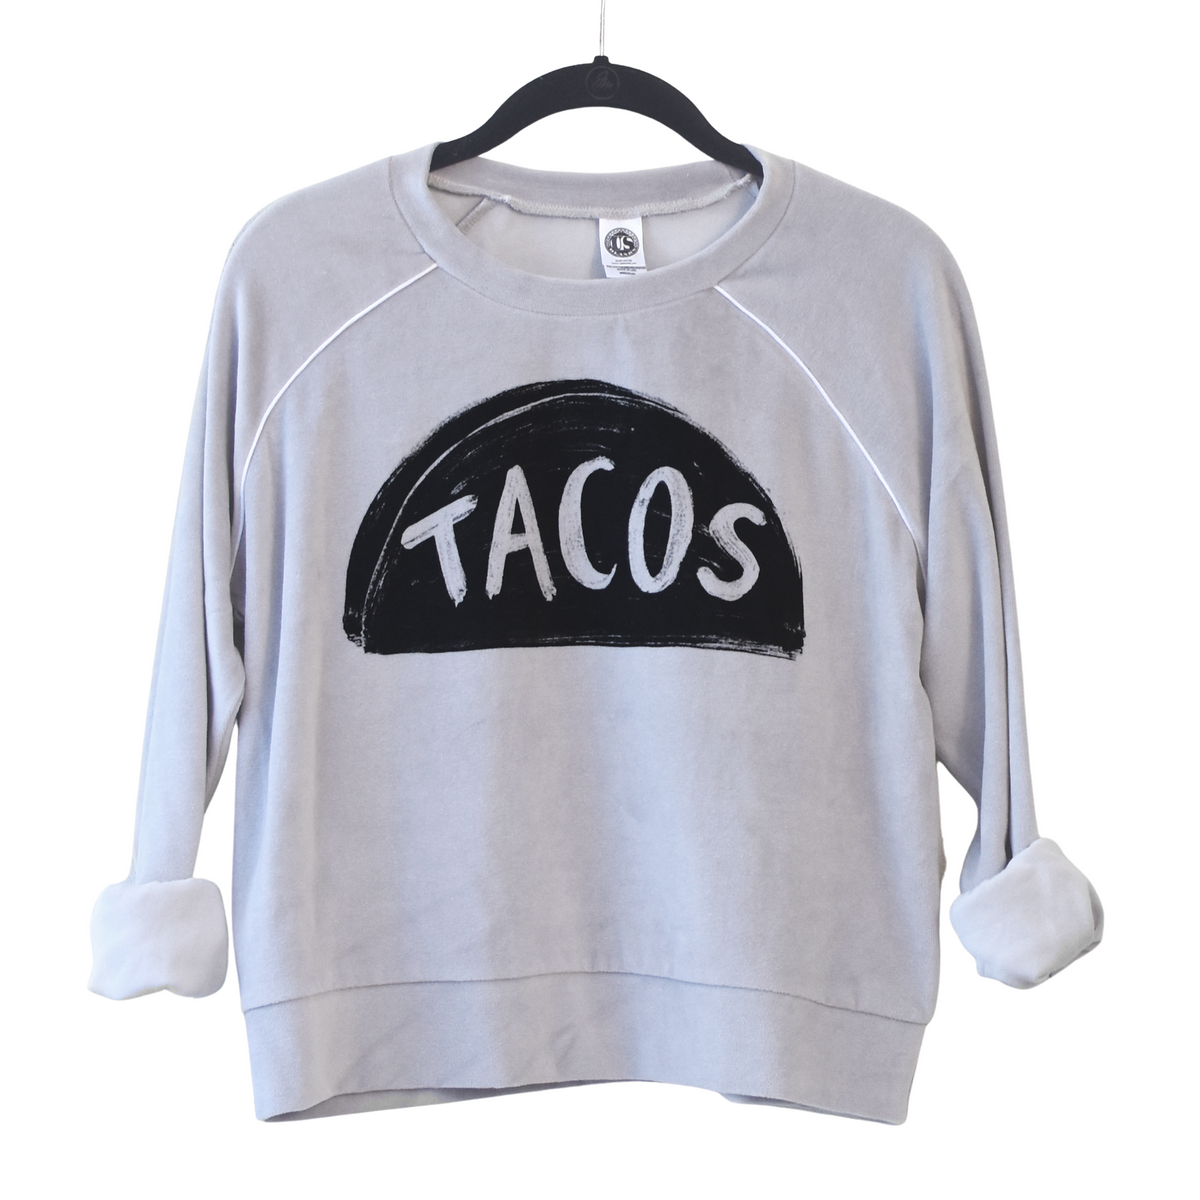 Taco Tuesday Sweatshirt, Velour Tracksuit Women, Crop Top Teen Gift